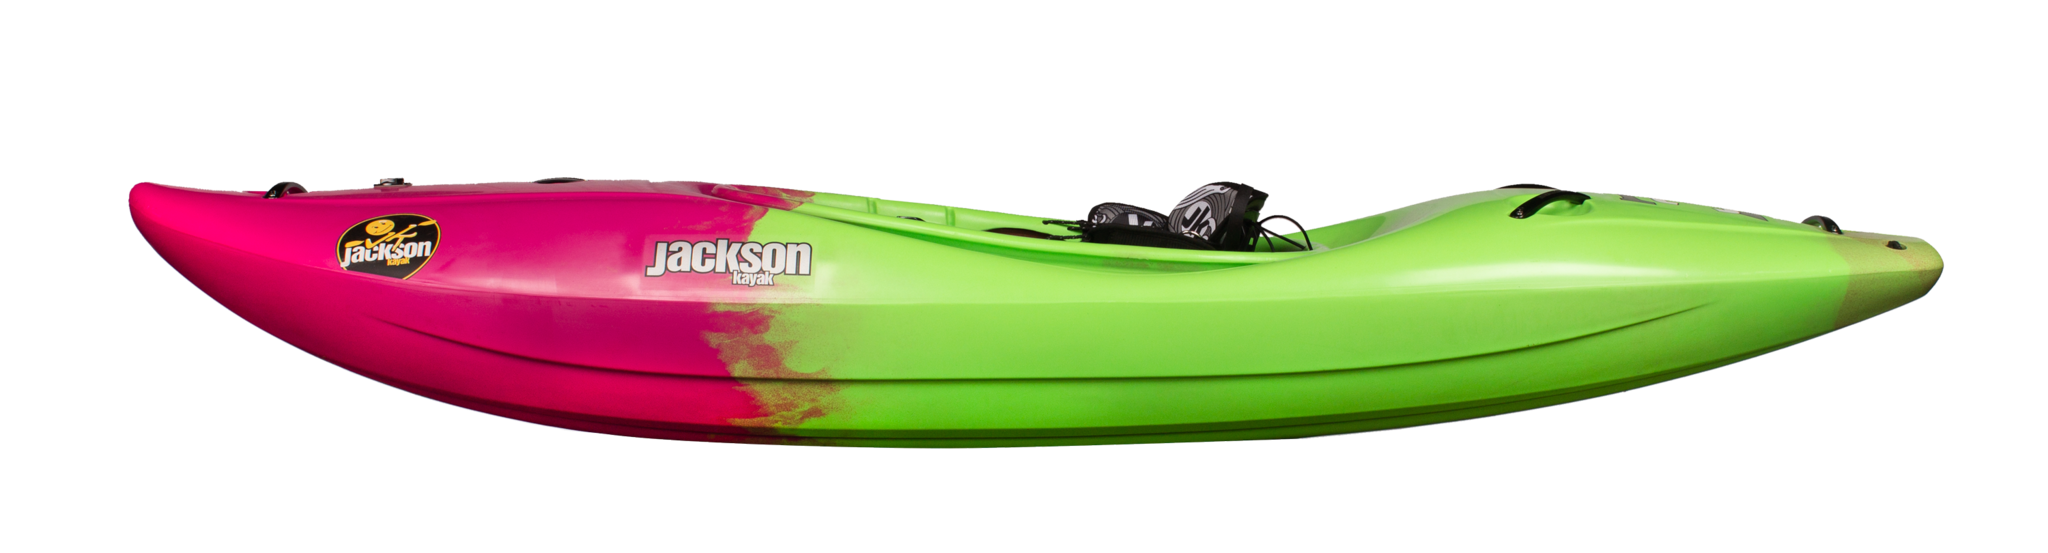 Jackson Kayak - Zen 3.0 MD